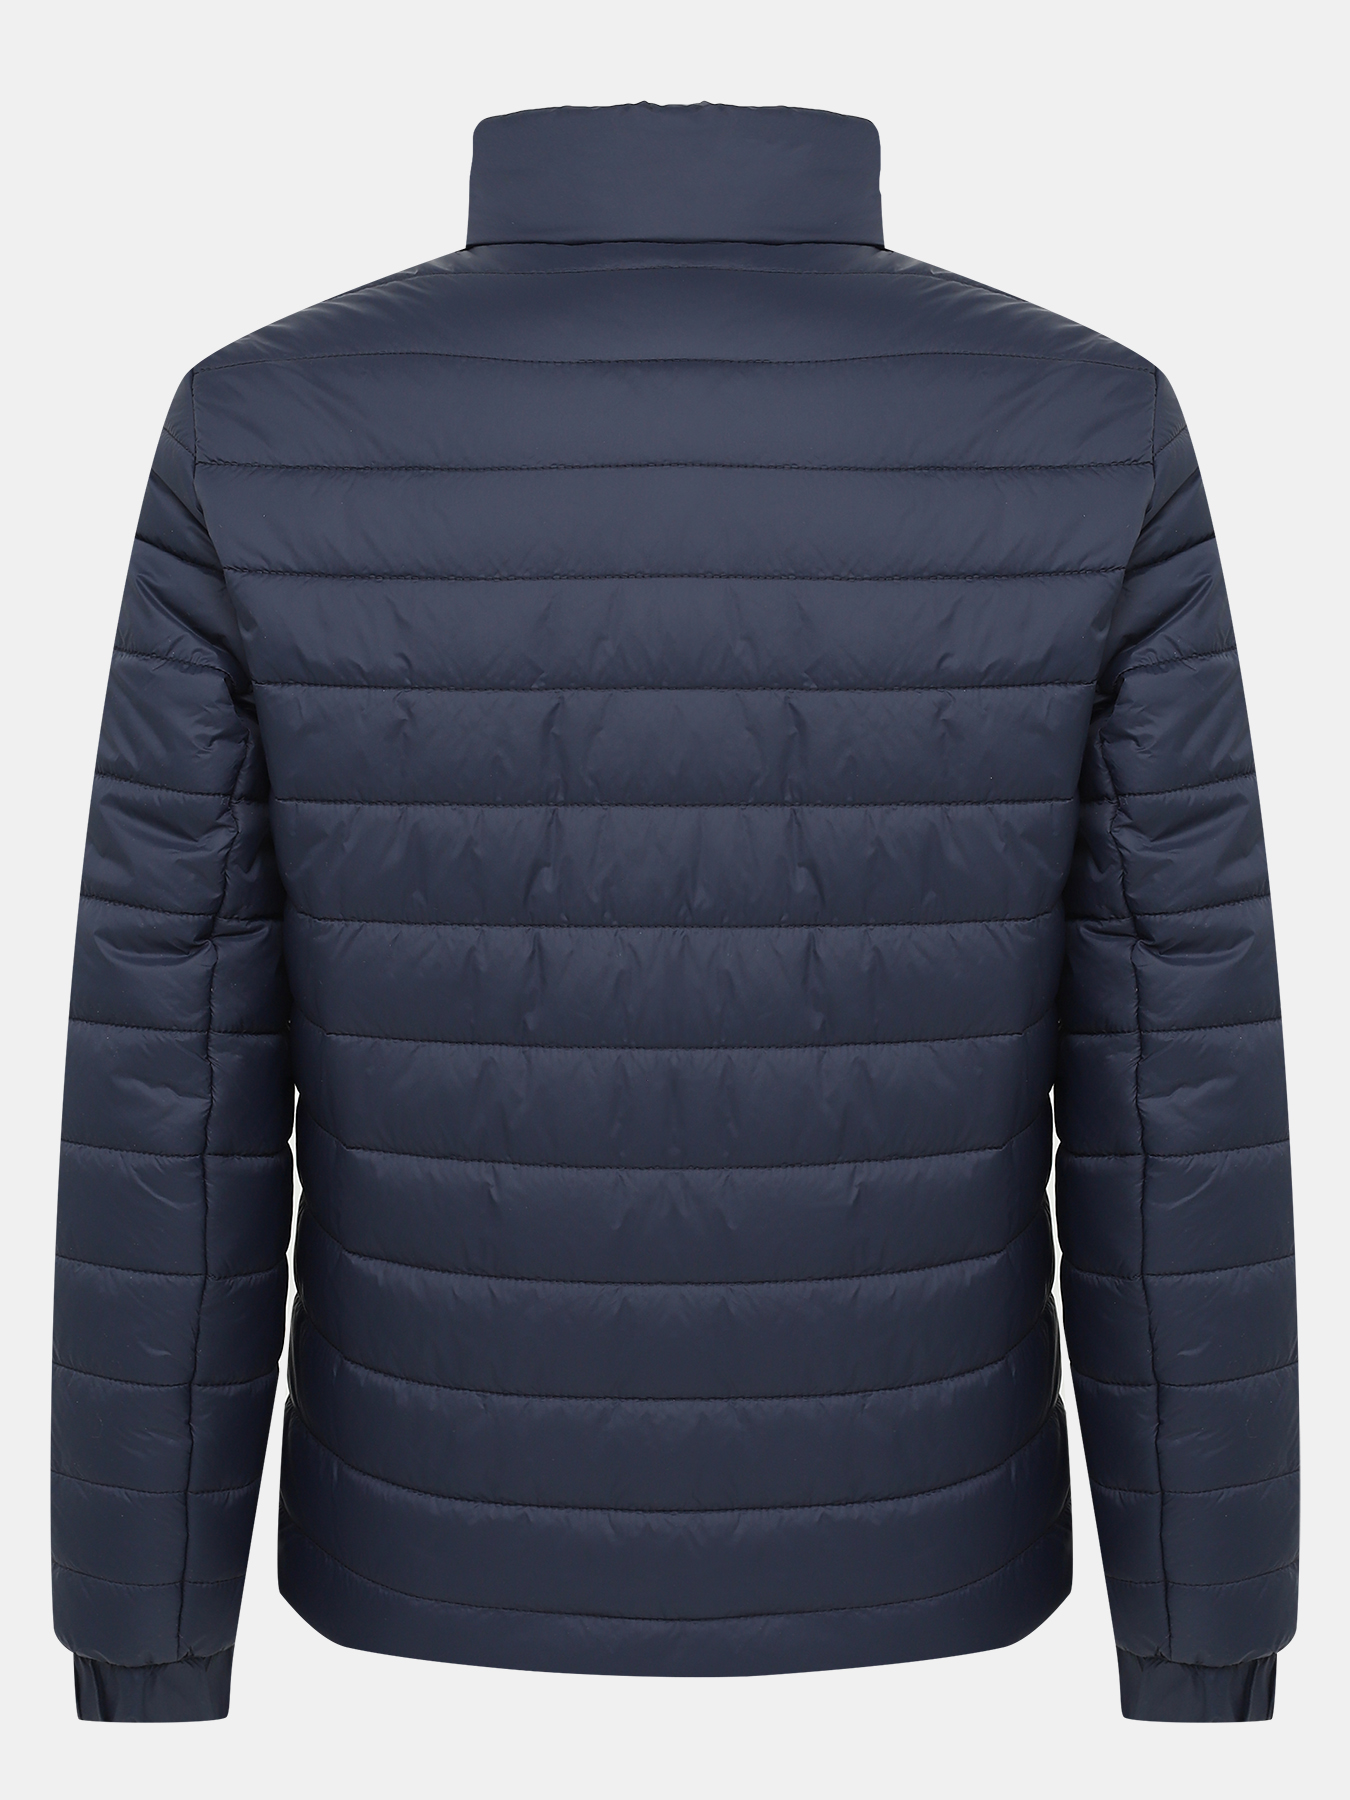 Куртка Benti HUGO 437018-046, цвет темно-синий, размер 54-56 - фото 5